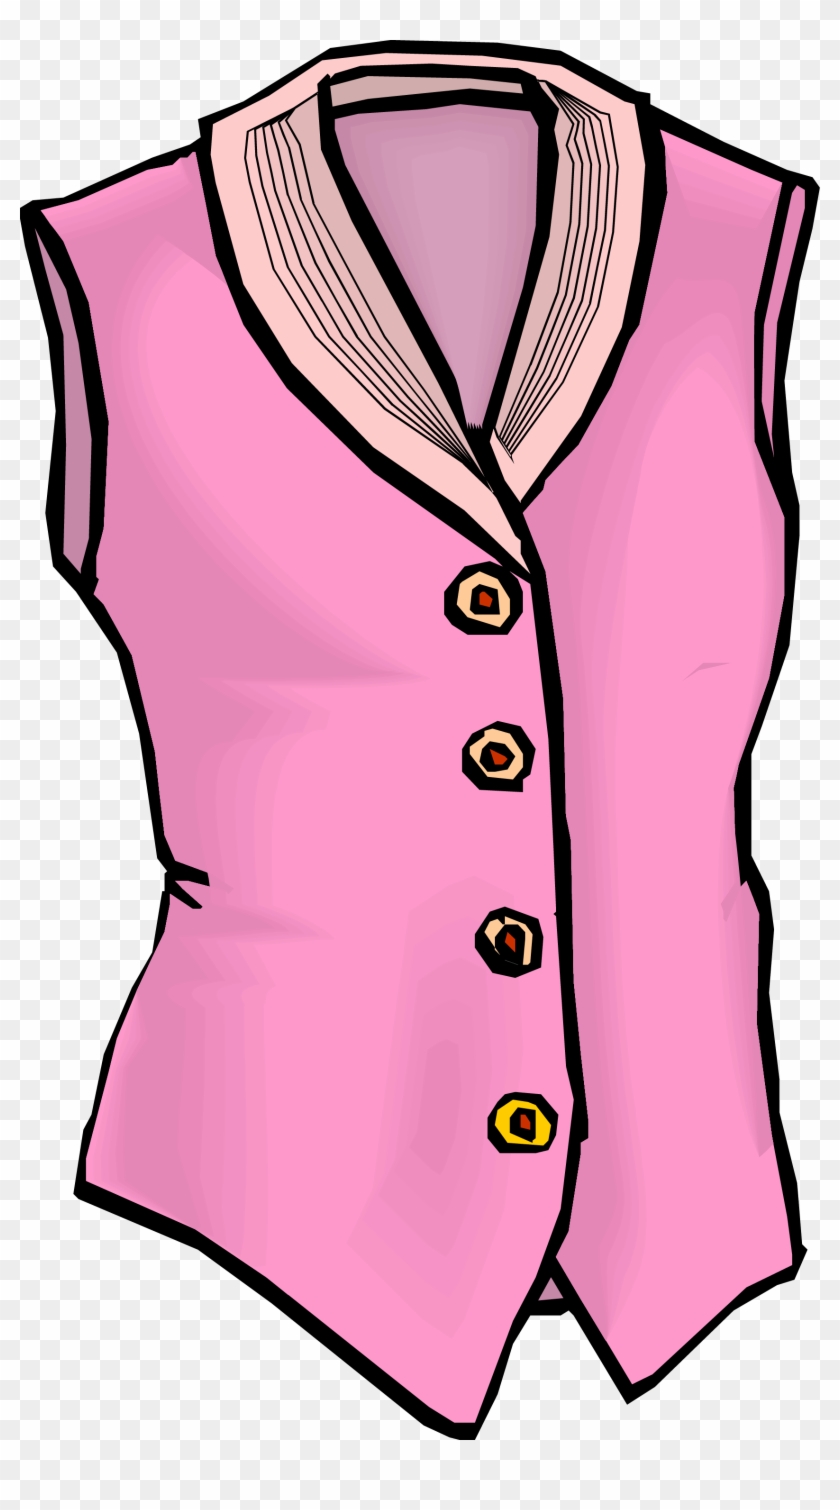 Sweater Vest Blouse Clip Art Pink Vector Dress 1688 - Sweater Vest Blouse Clip Art Pink Vector Dress 1688 #369773